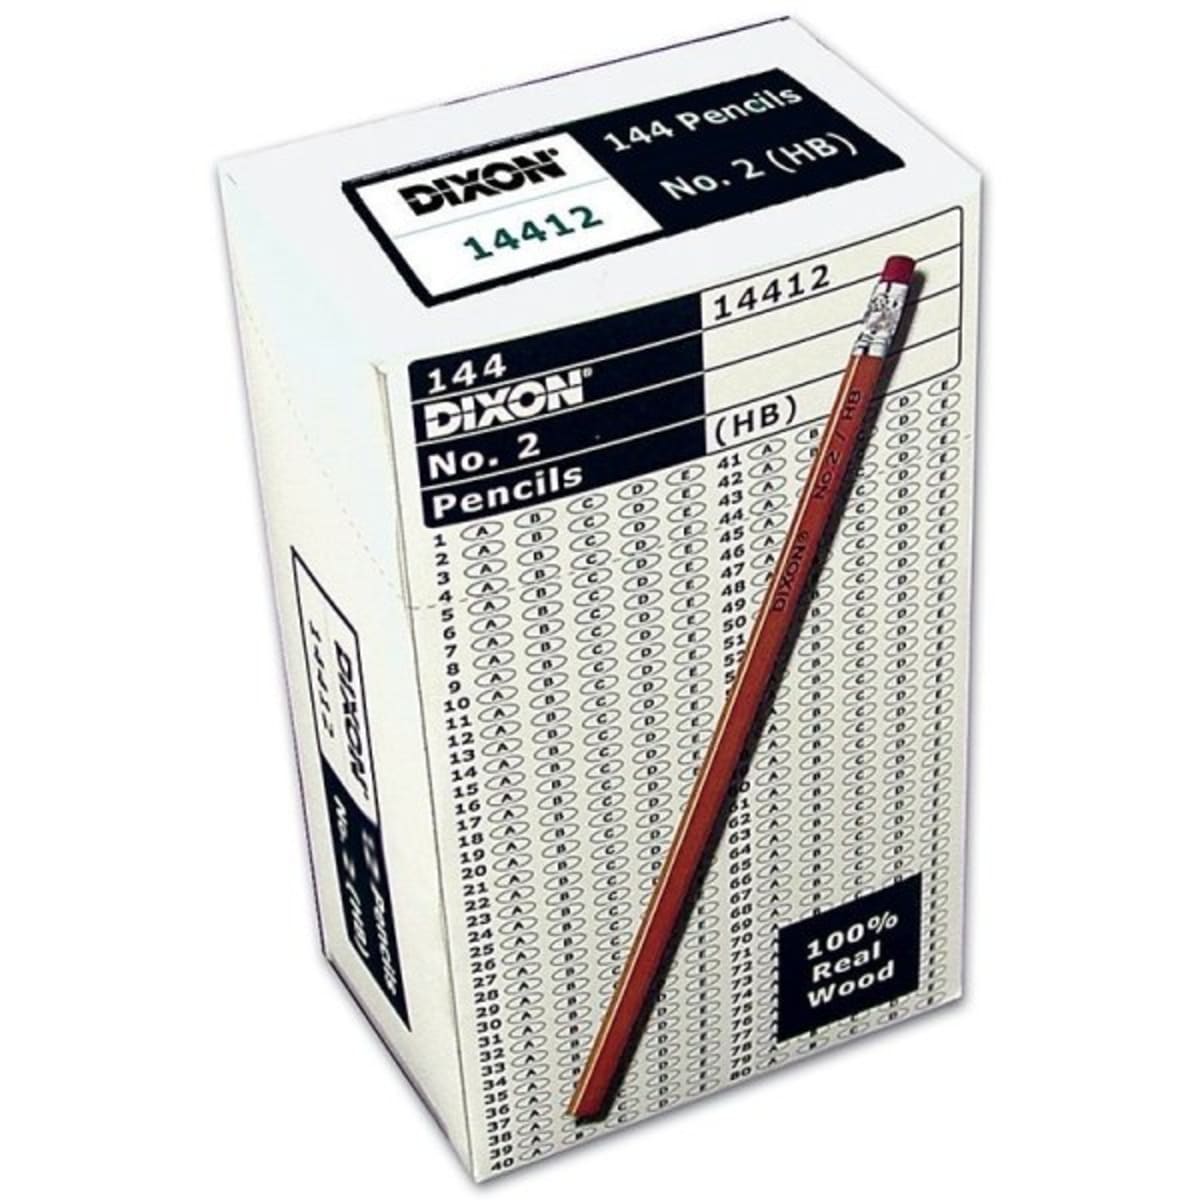 Ticonderoga Dixon 2 Pencils HB Yellow for sale online